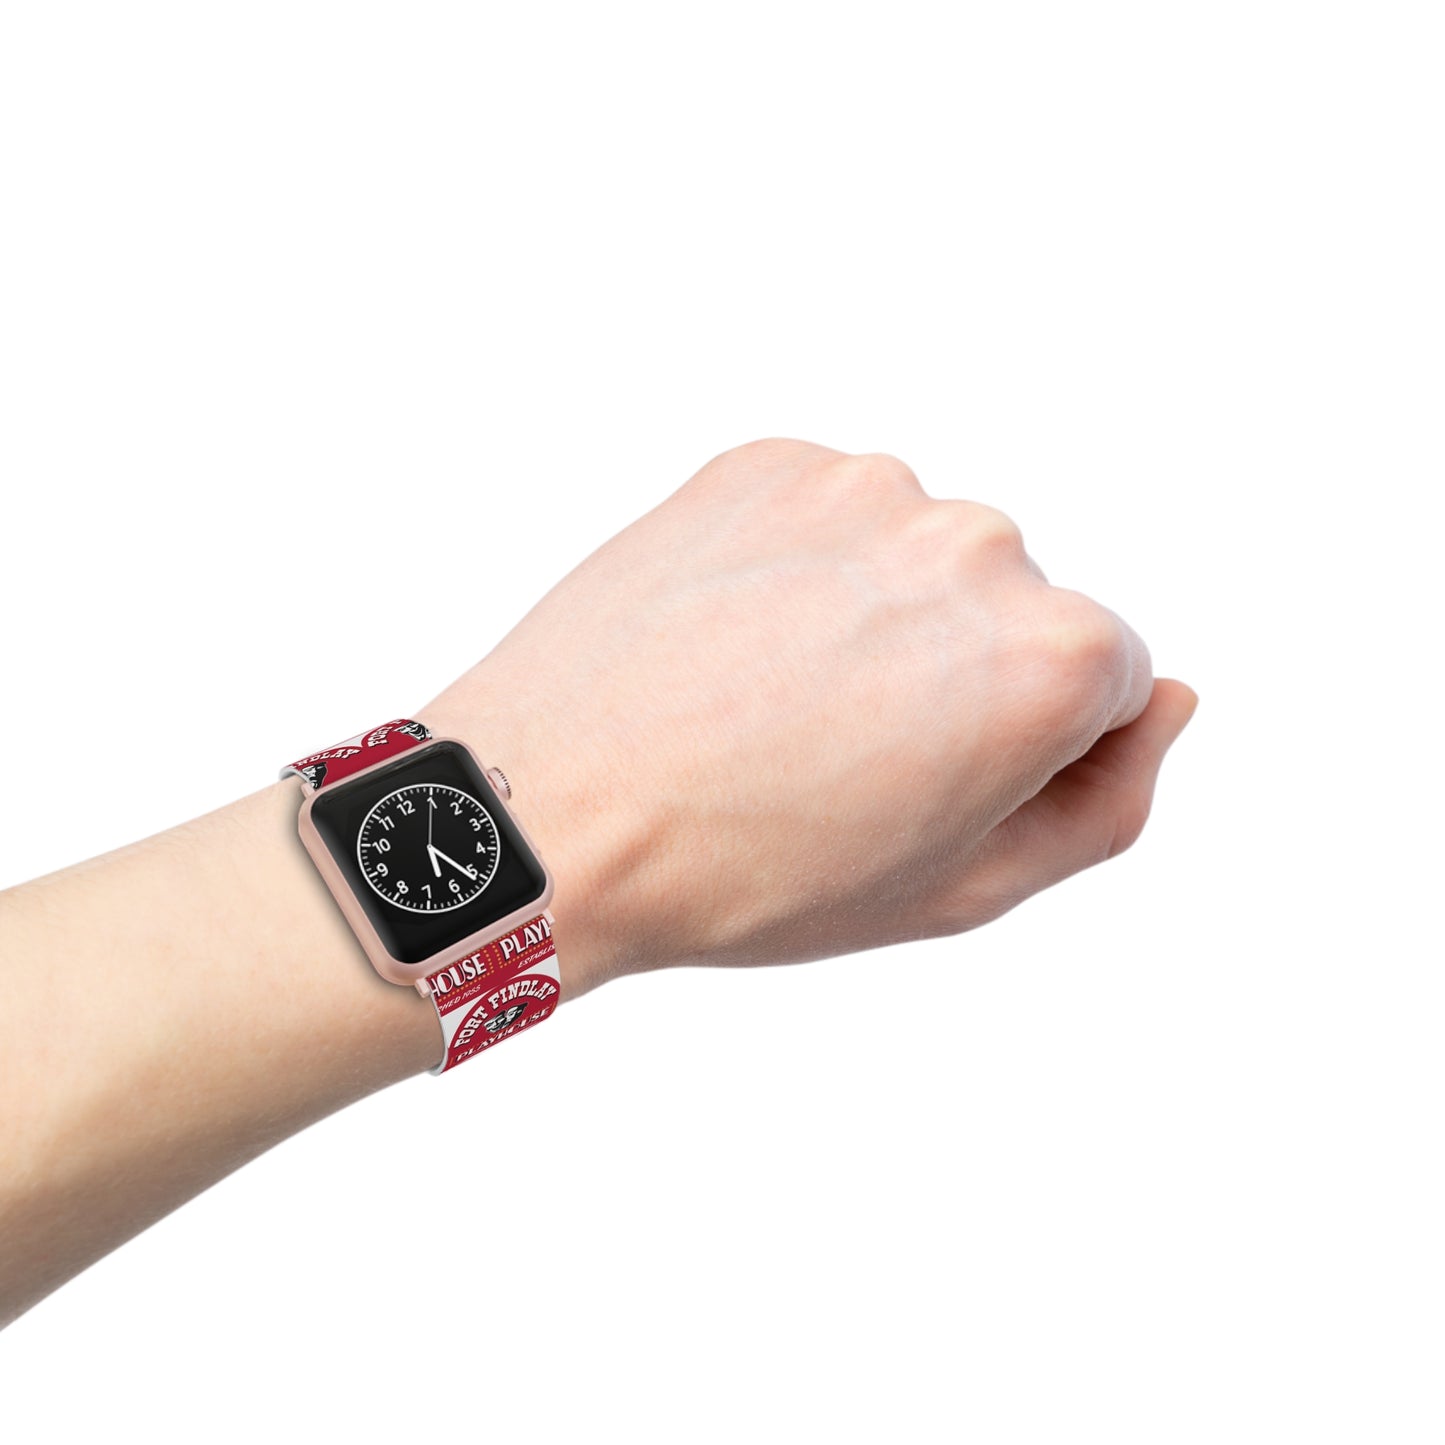 Fort Findlay Playhouse Uhrenarmband für Apple Watch